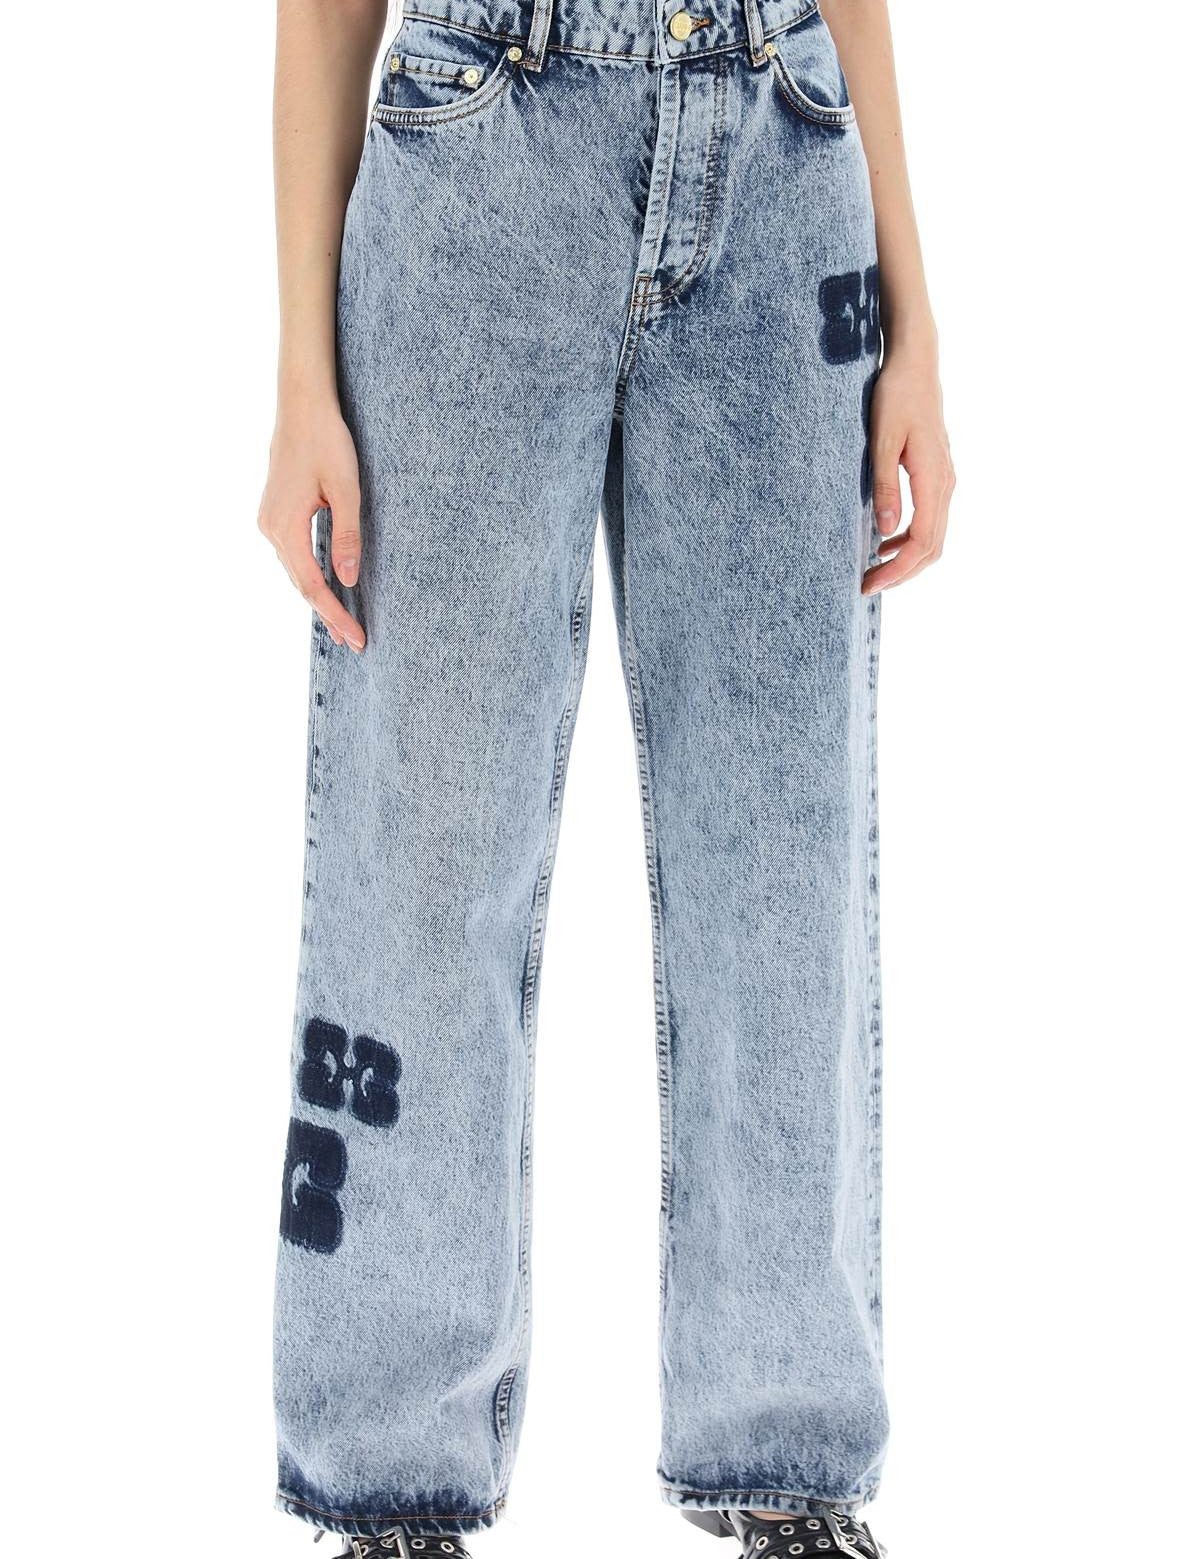 ganni-wide-leg-izey-jeans-with-contrasting-details_c1bdfcf1-8270-48cd-93c3-2247a75b21fc.jpg